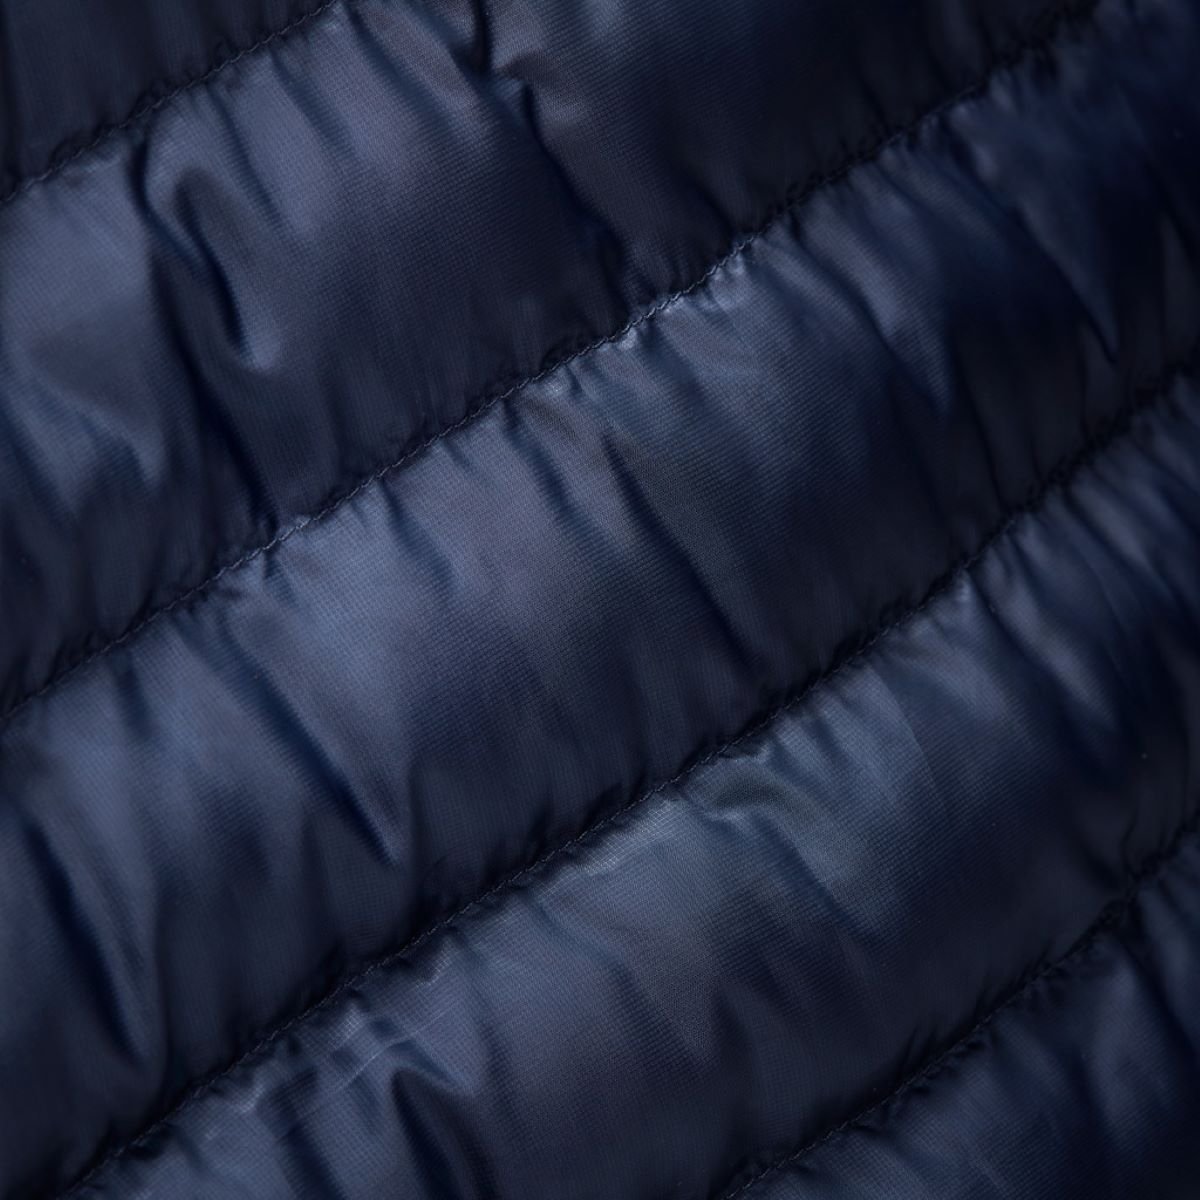 Bunda Mammut Albula IN Hybrid Jacket M - modrá